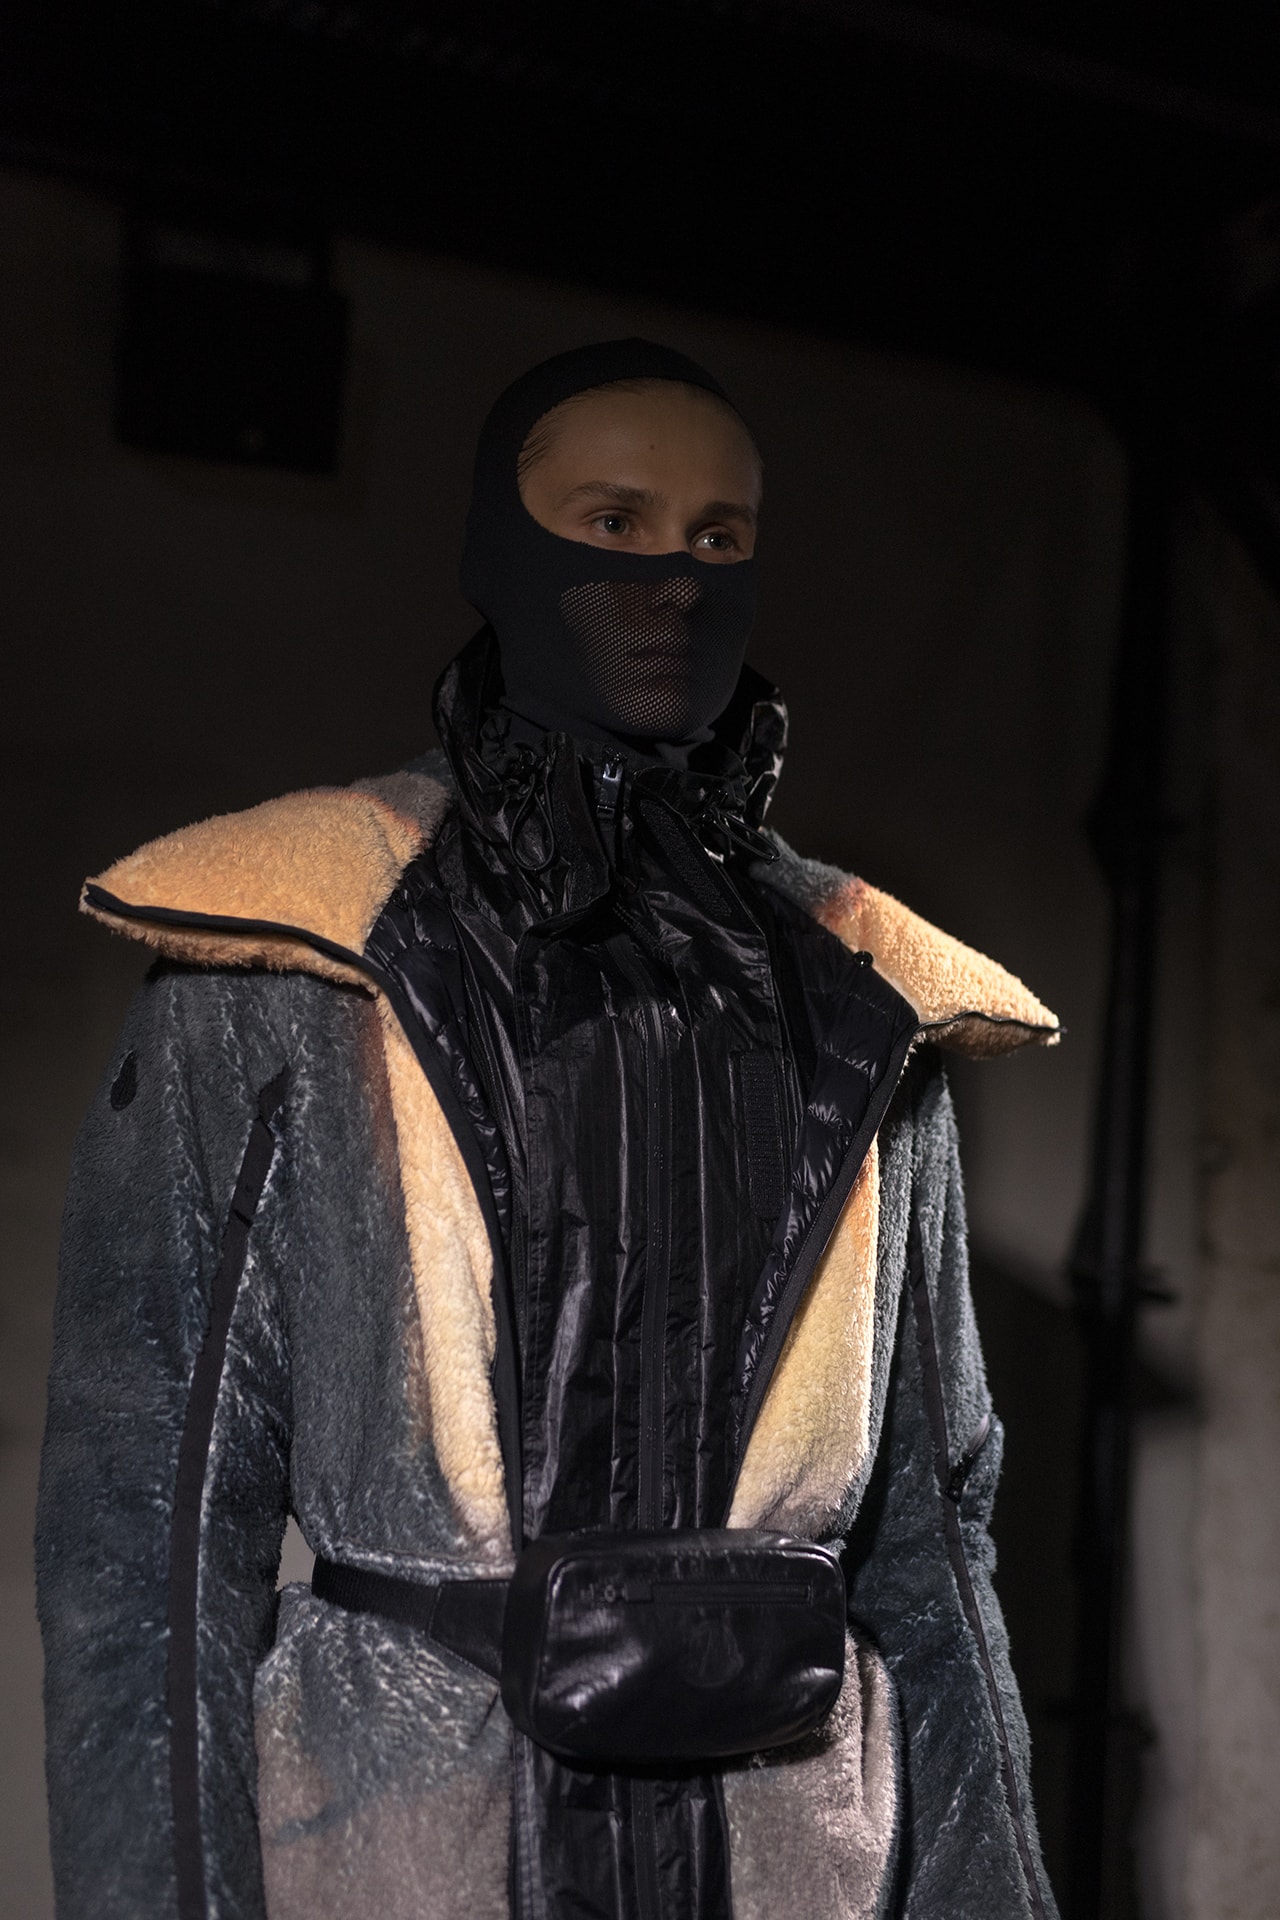 moncler genius milan fashion week presentation alyx matthew williams collaboration mask